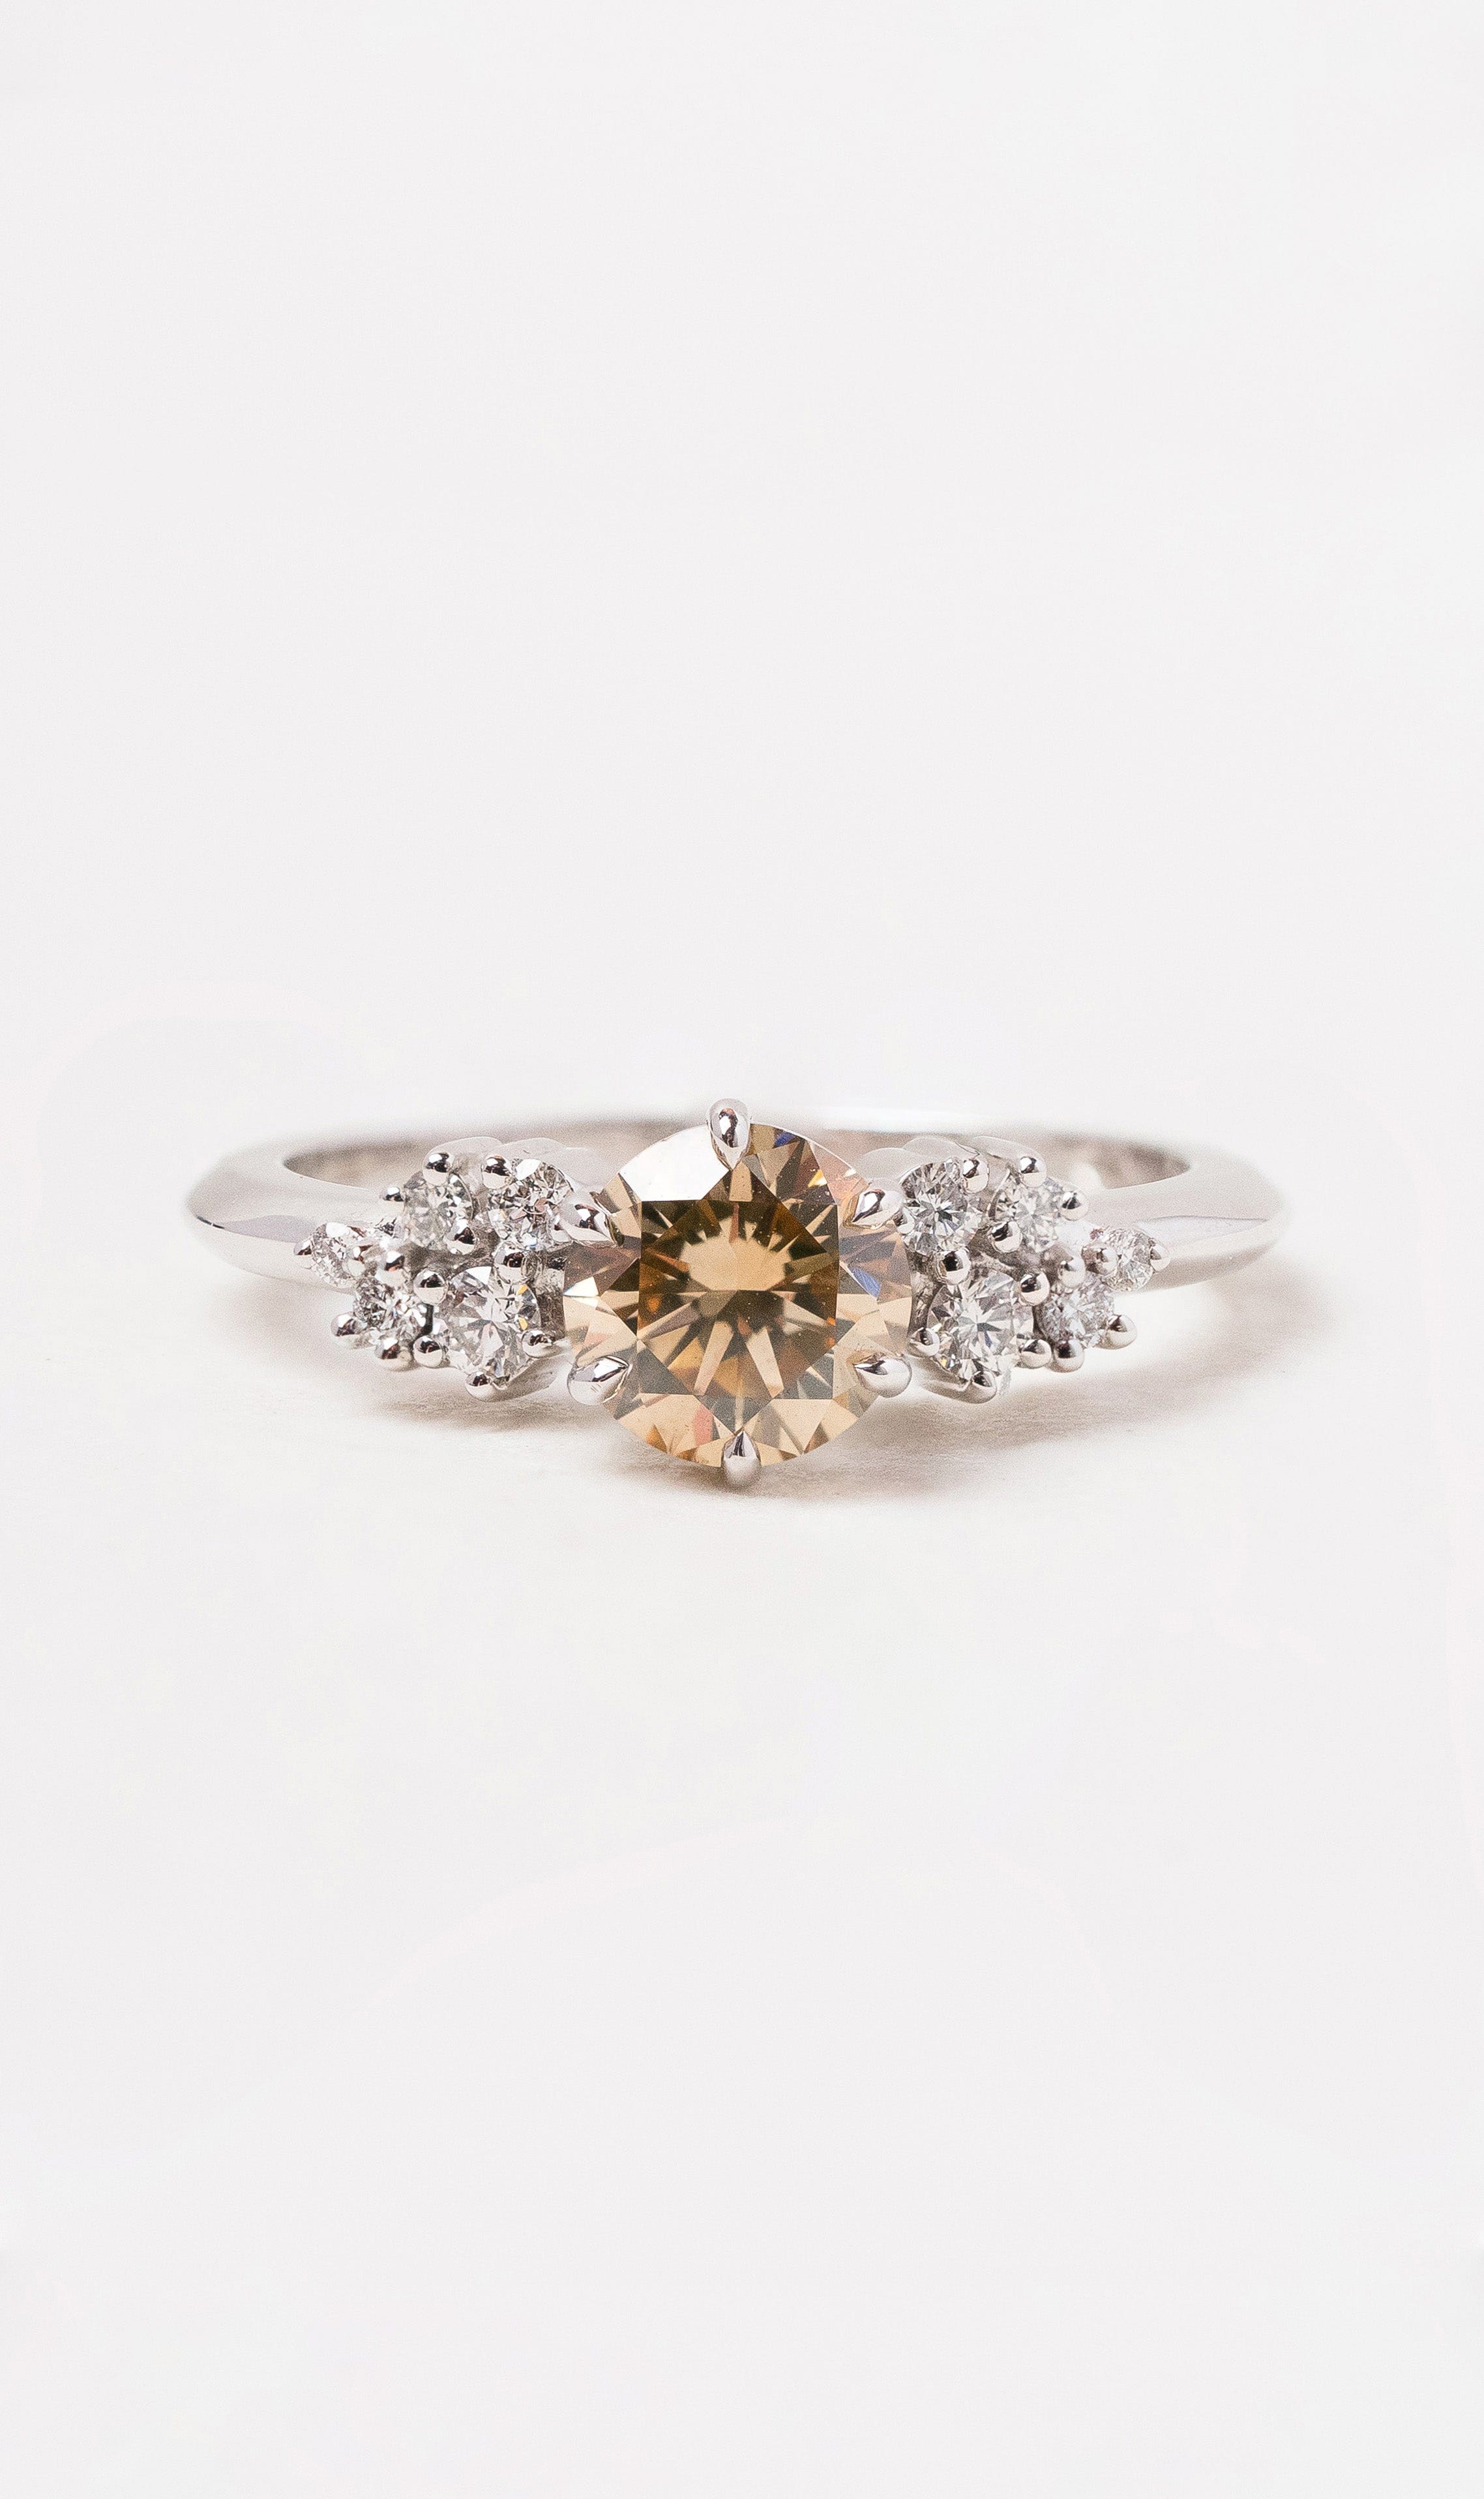 Hogans Family Jewellers 18K WG Champagne Diamond Ring